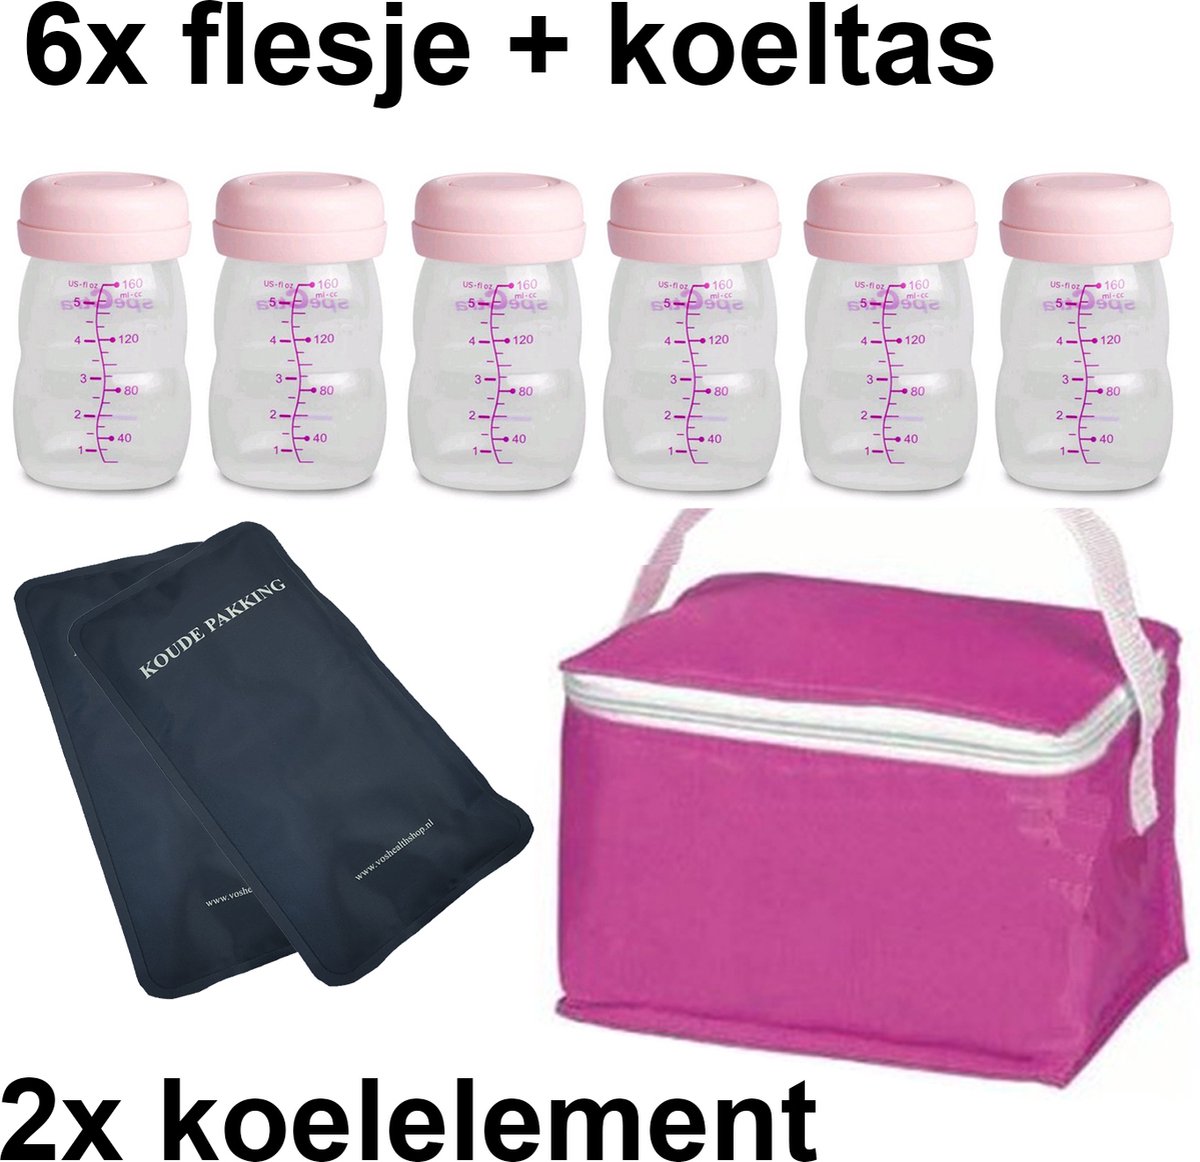 Moedermelk flesjes - 6 x 160ml - met roze koeltasje en koelelementen - borstvoeding flesjes - BPA vrij